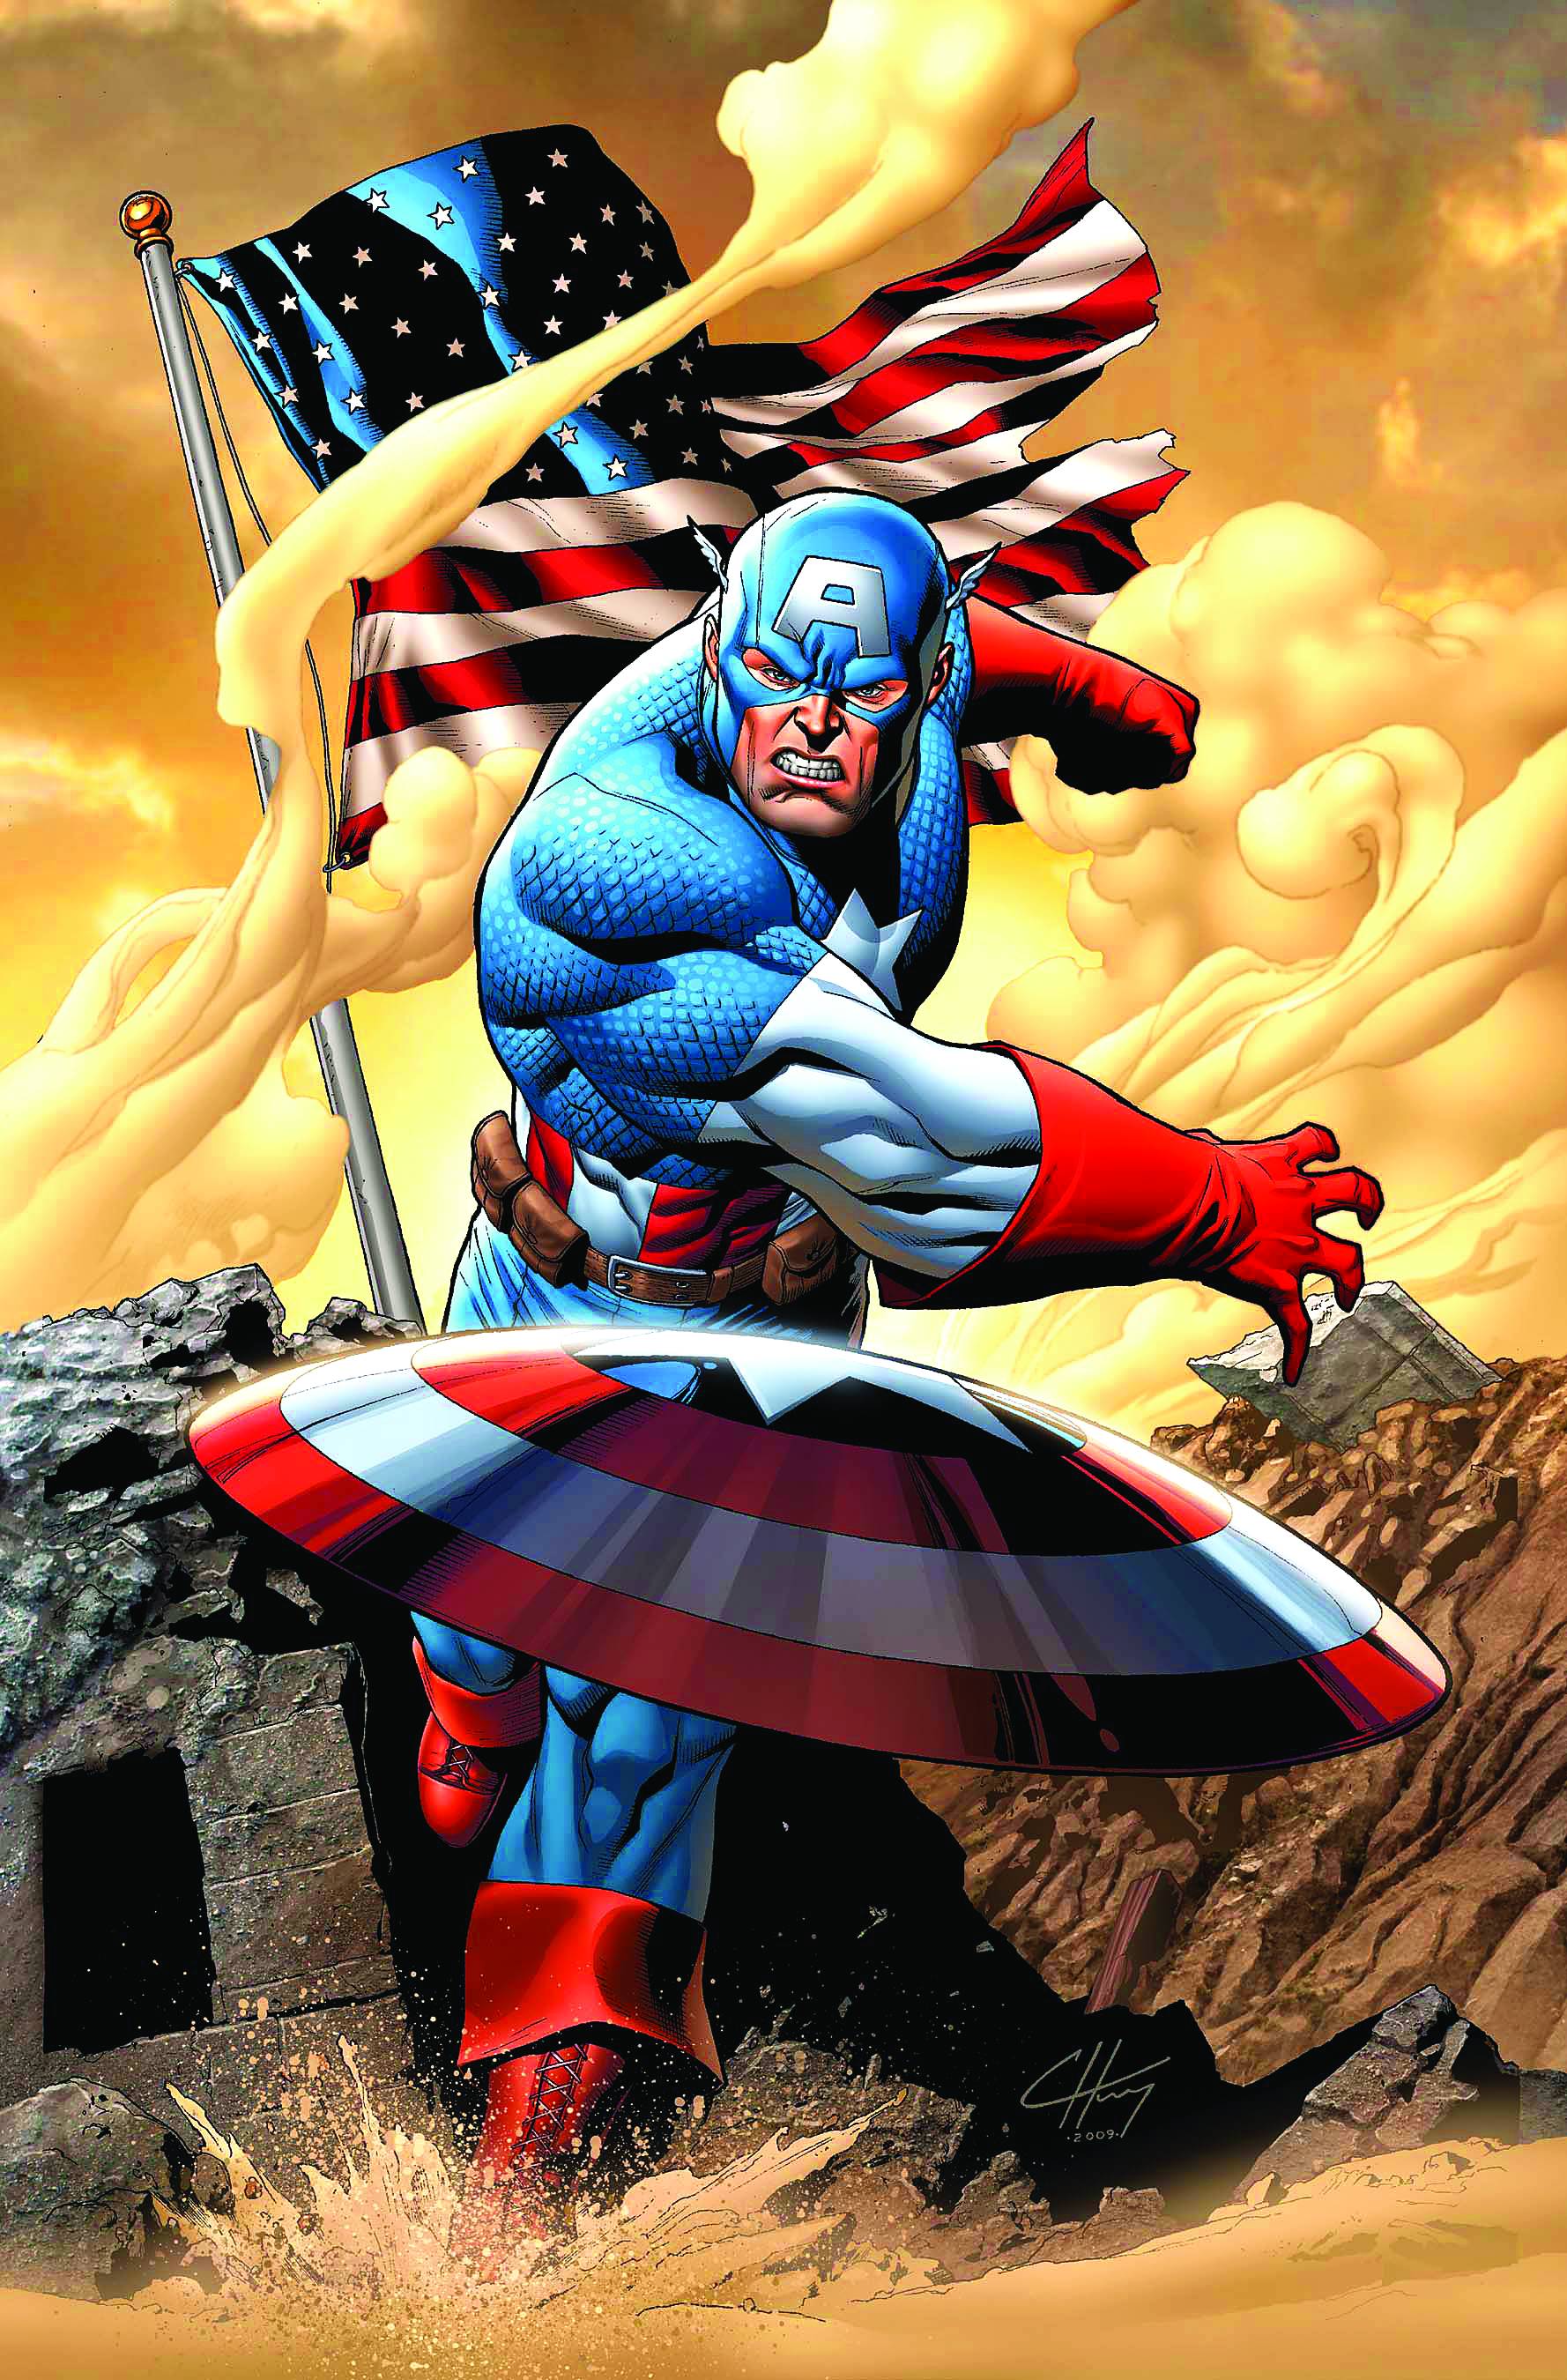 Marvel Adventures Super Heroes #3 (2010)